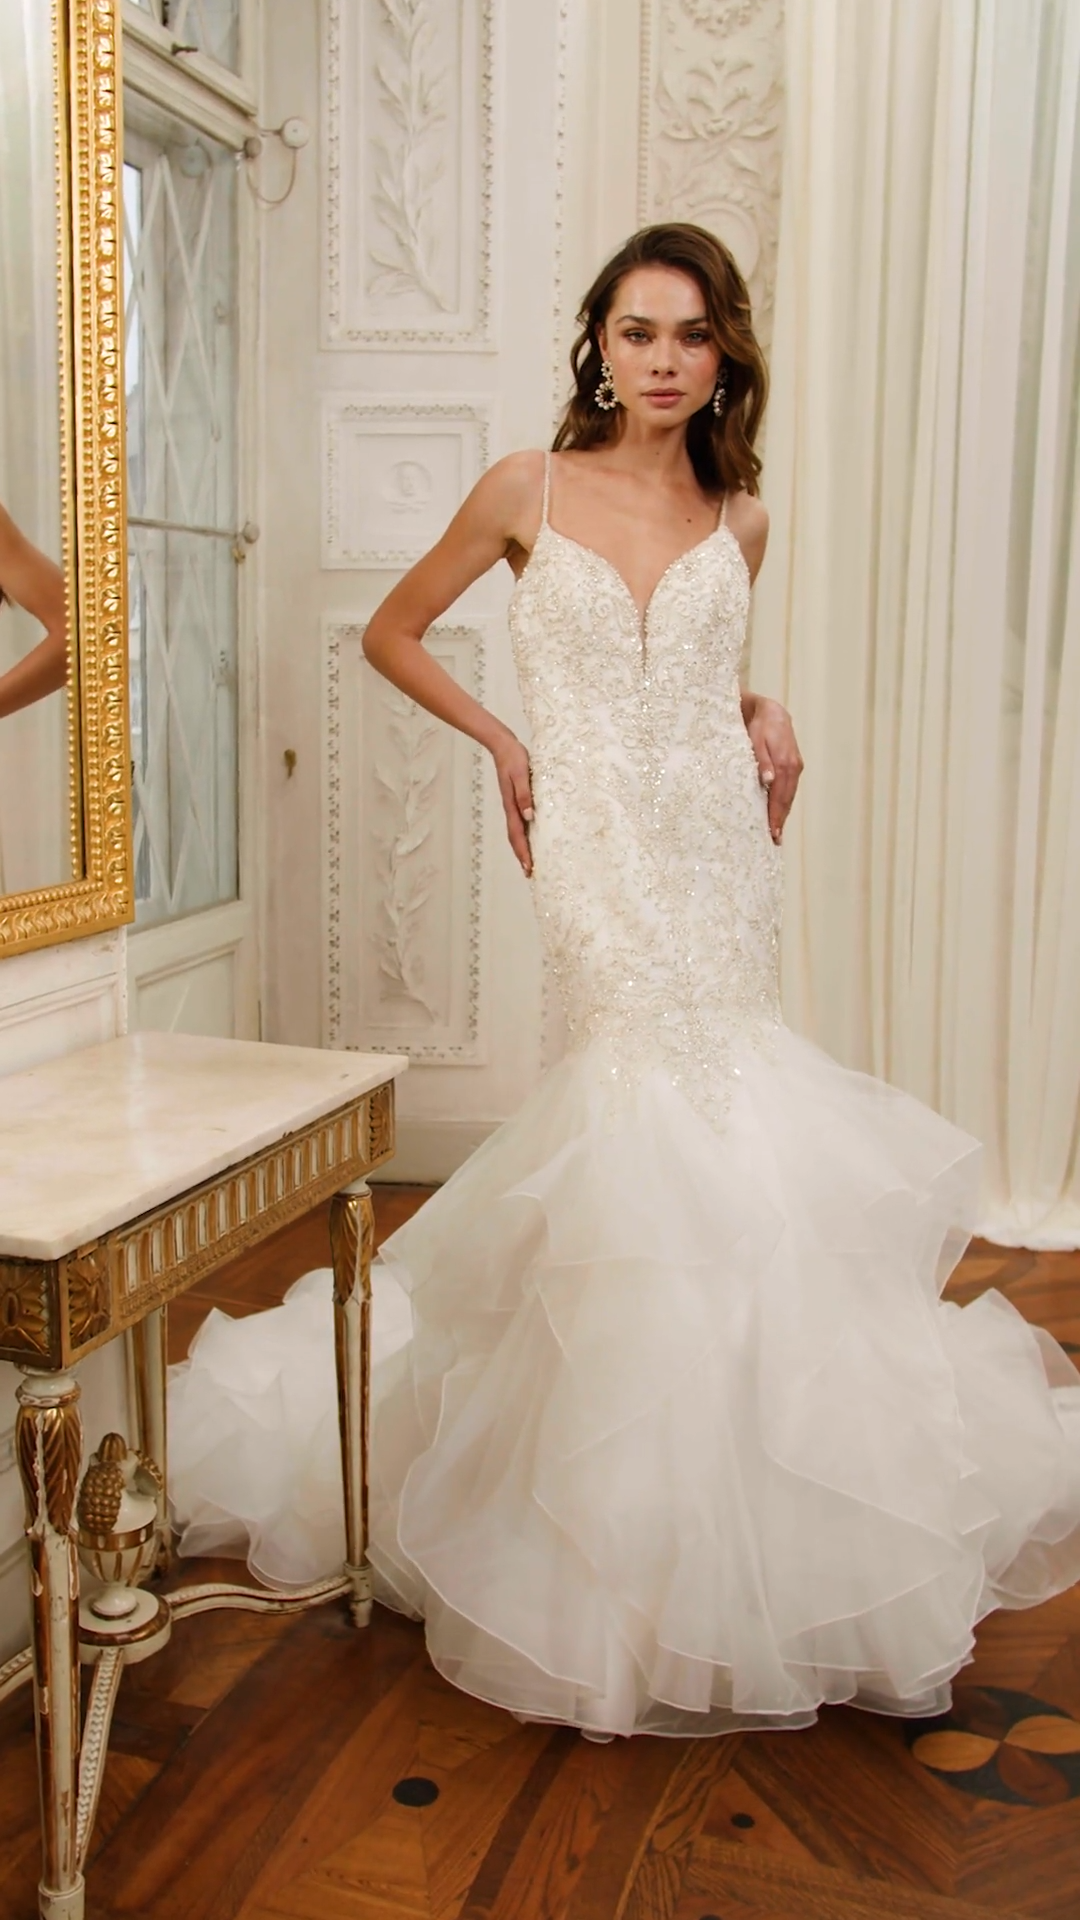 ValStefani HEART couture high quality silk wedding dresses